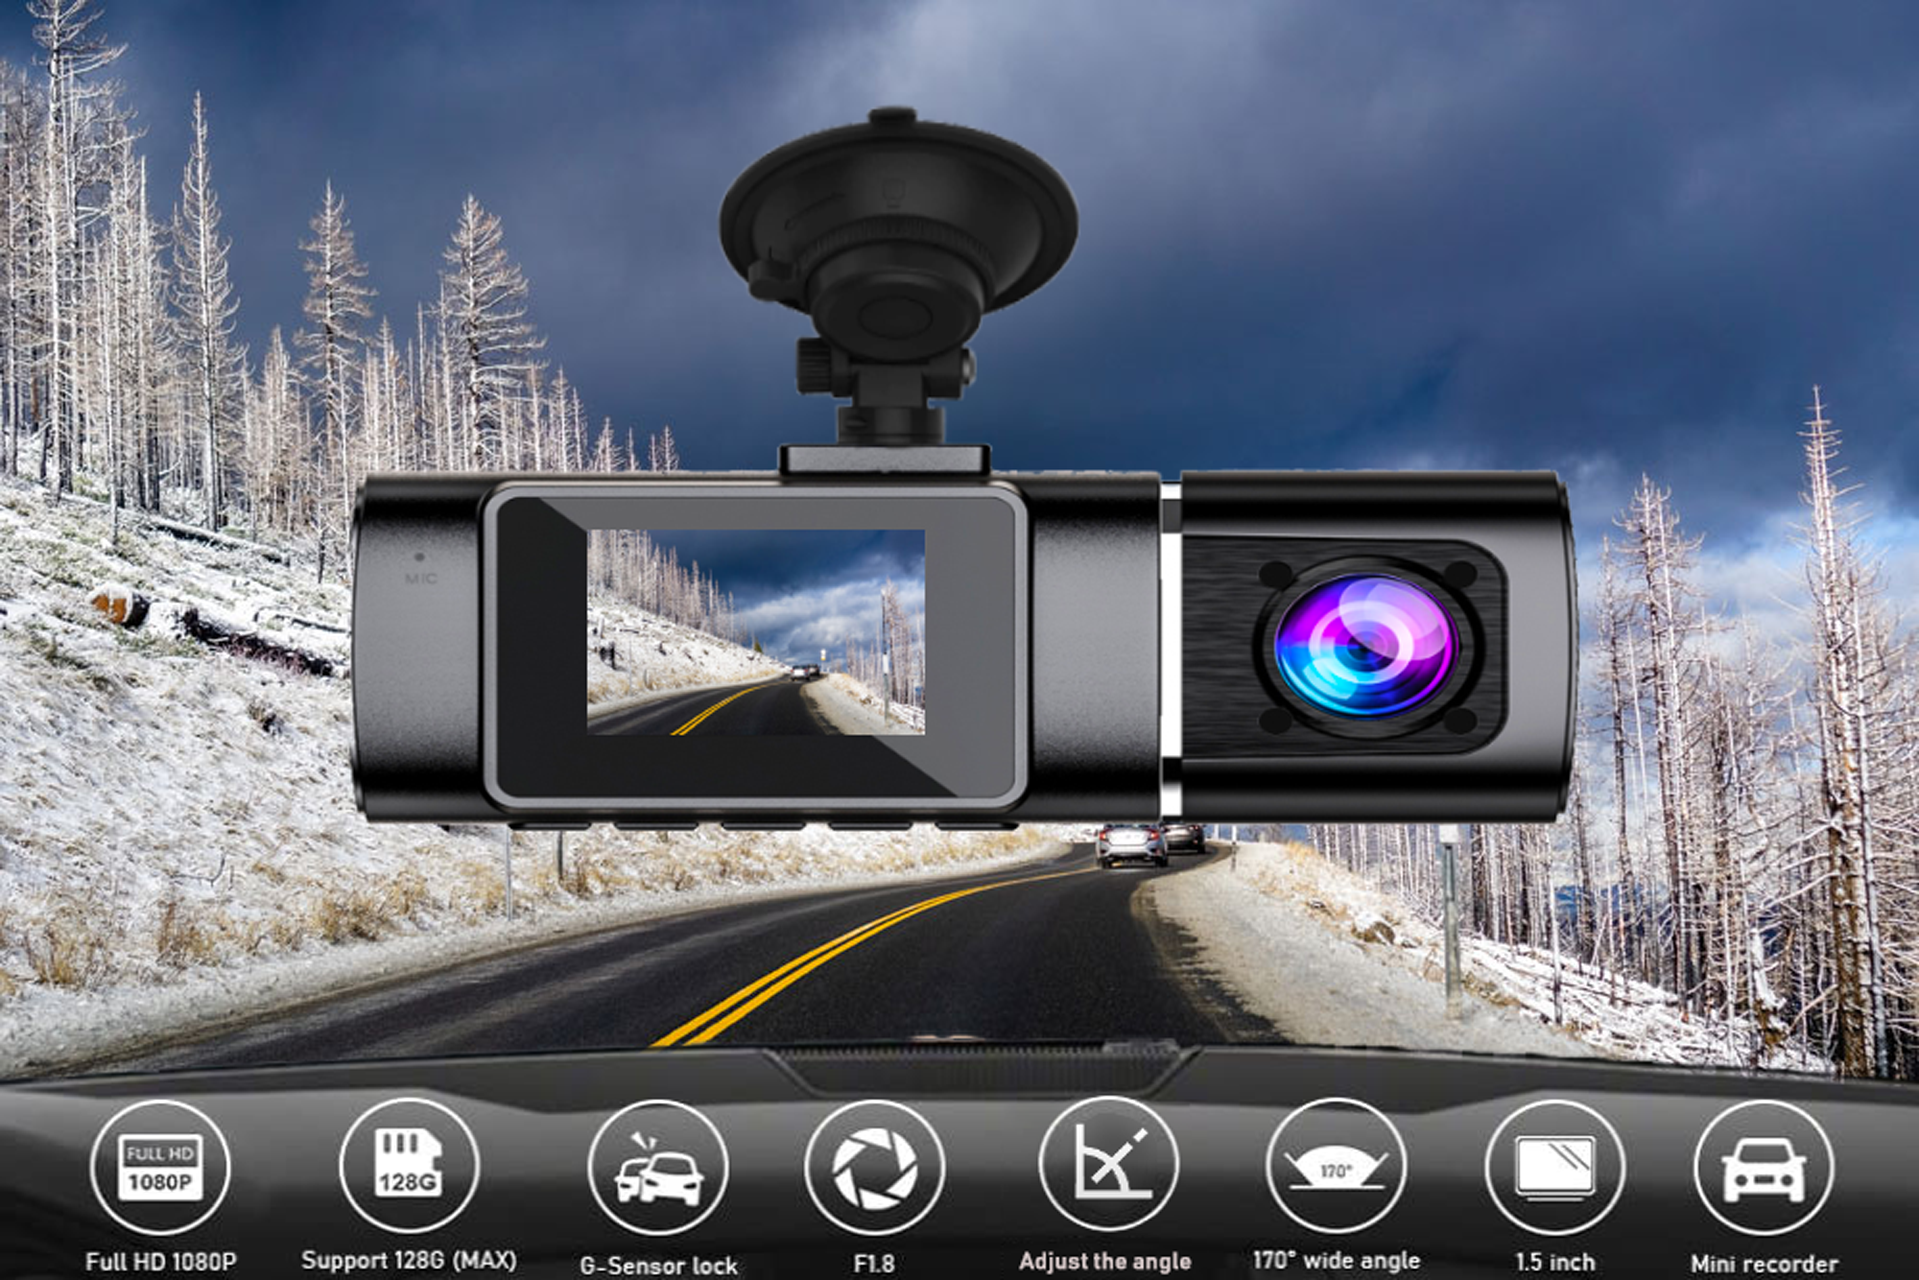 YXZQ Handheld GPS Detector G30 Car D-V-R Dash Camera Rear View Dual Lens Video Recorder 1080P HD 2.2 Loop Recording Night Vision G-Sensor Dash Cam Registrar Hidden Device Detection and Tracking 